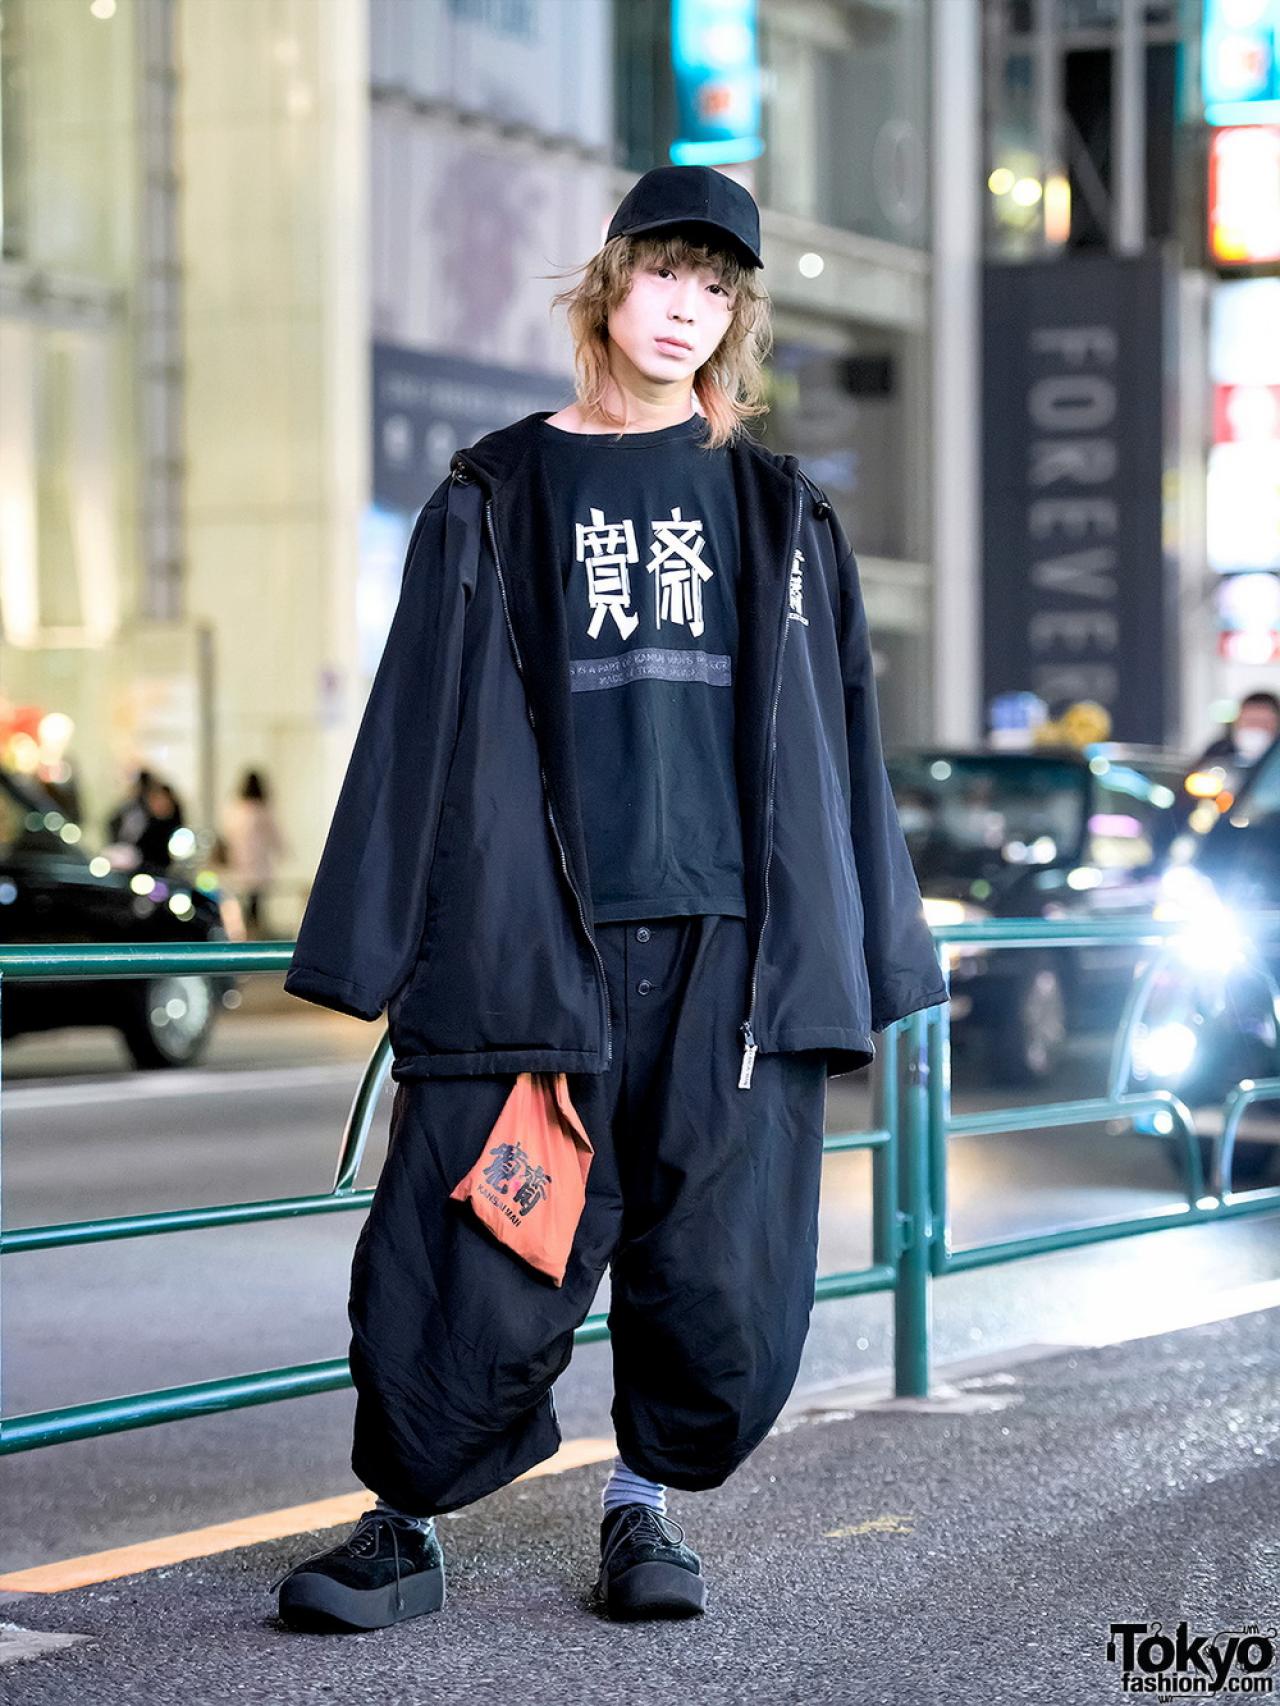 Токийские одежда. Хараджуку Токио стиль. Модники Токио. Токийский стрит стайл. Харадзюку стиль мужской.